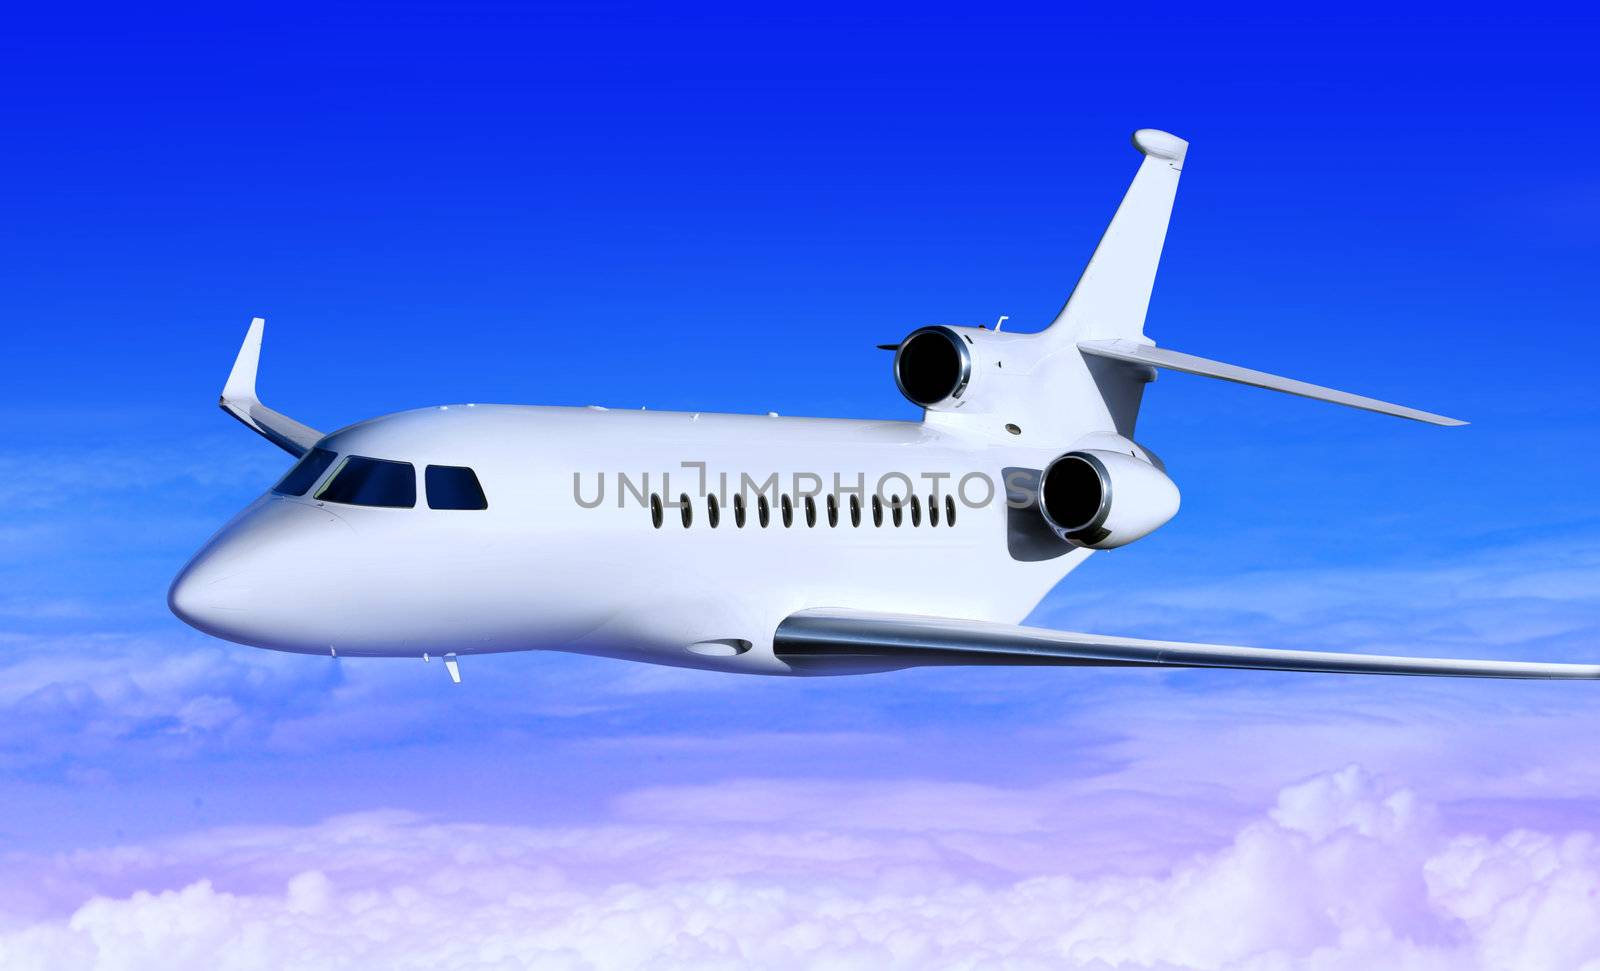 private white jet plane in the blue sky